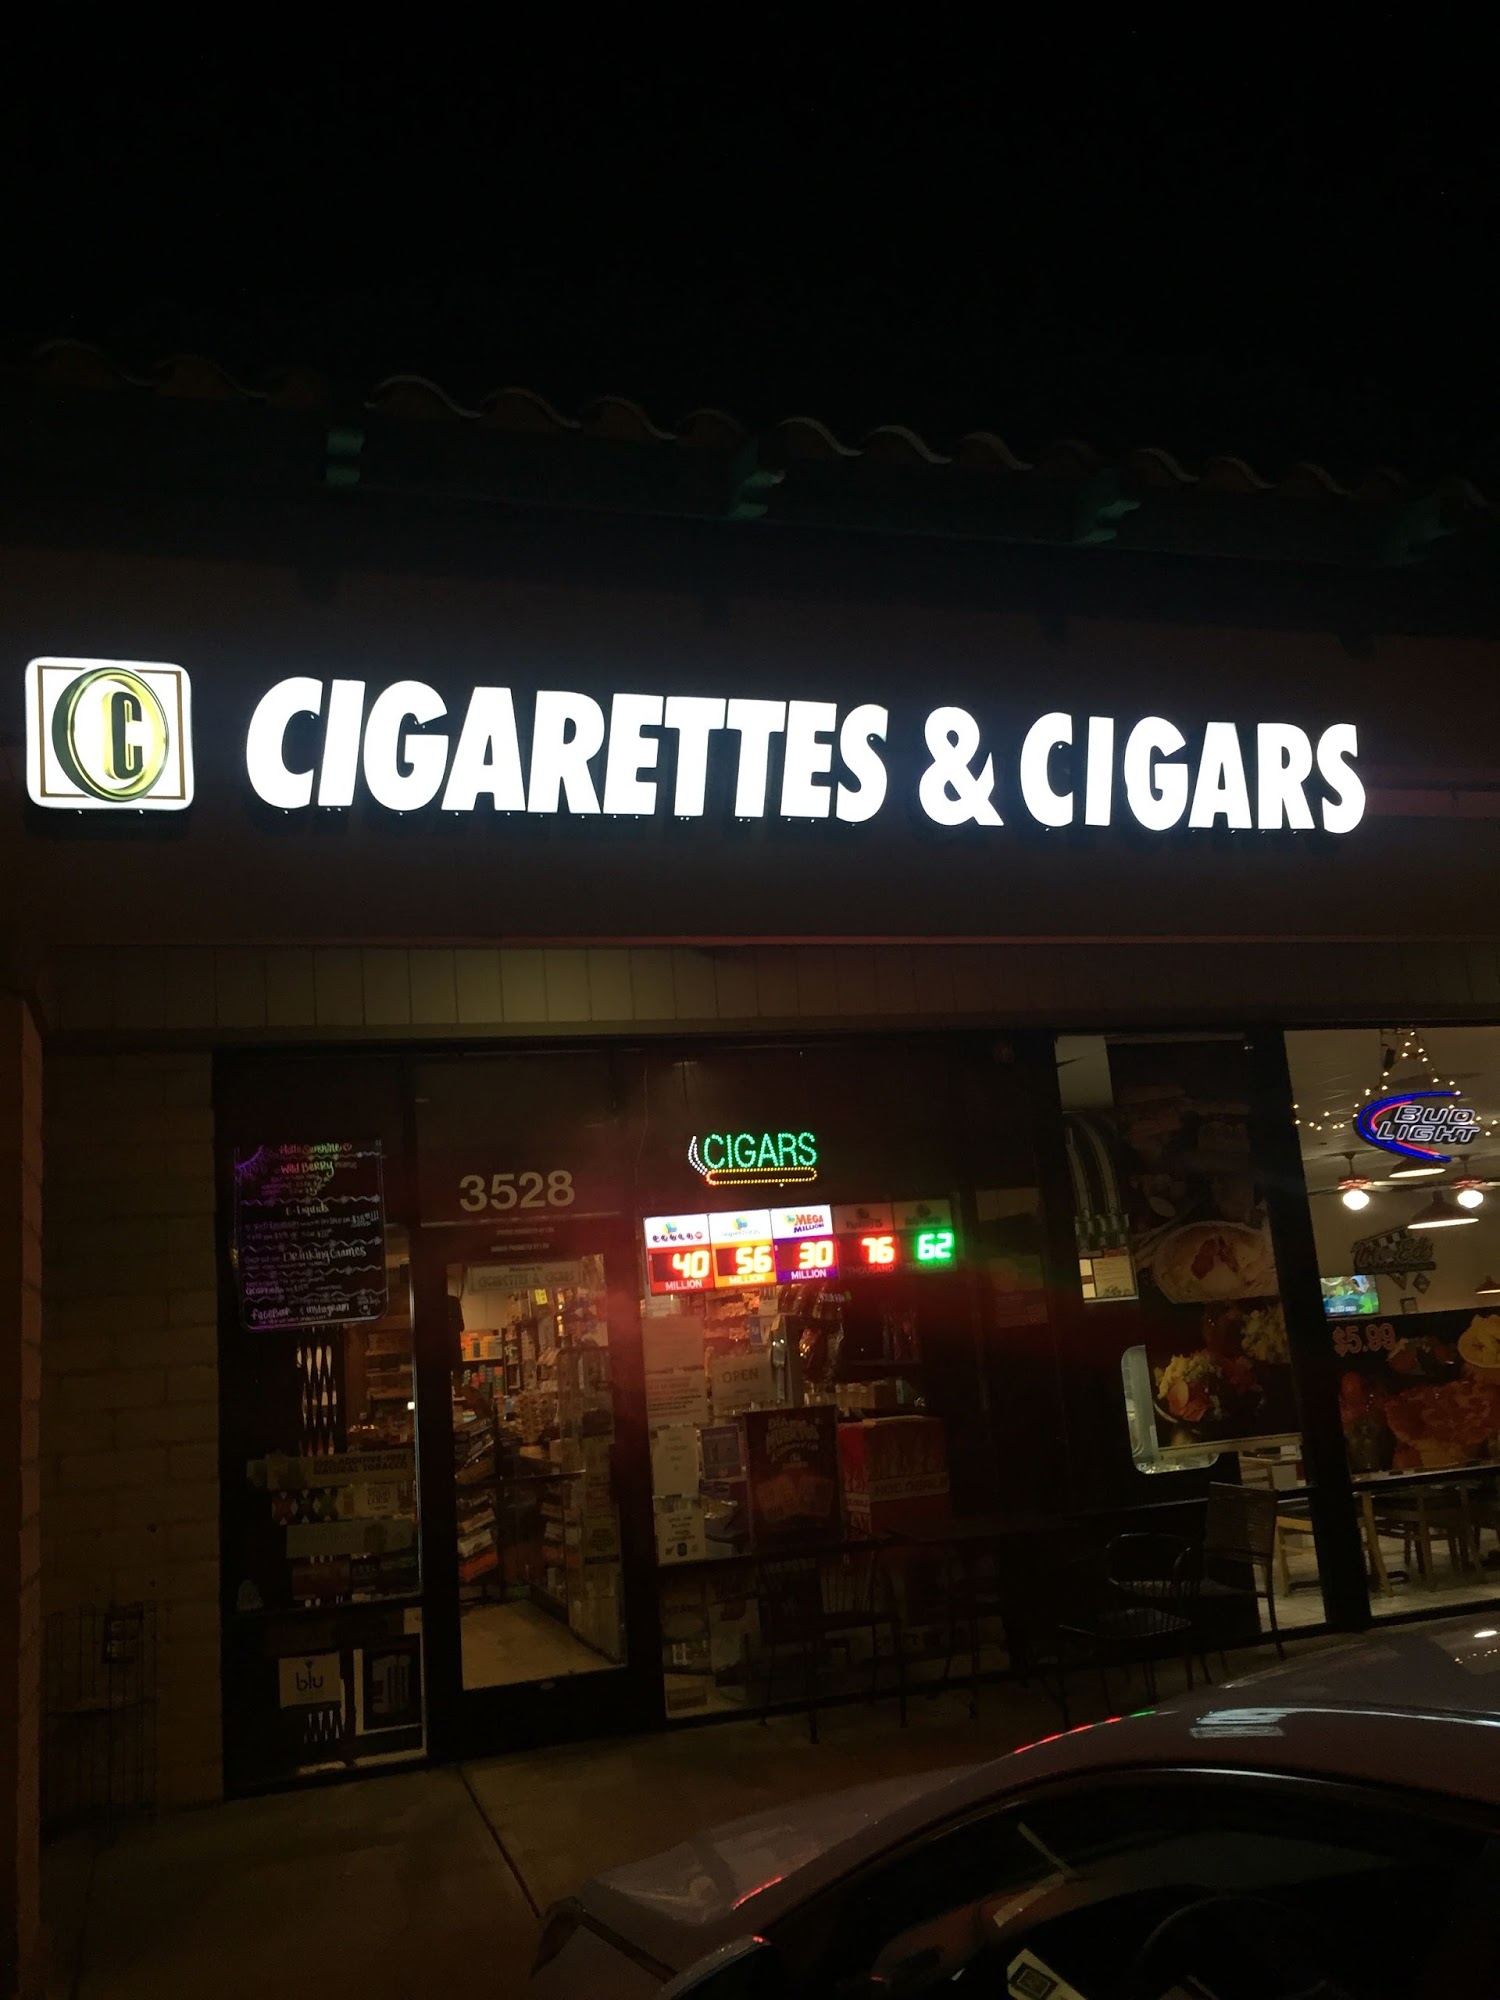 Cigarettes & Cigars